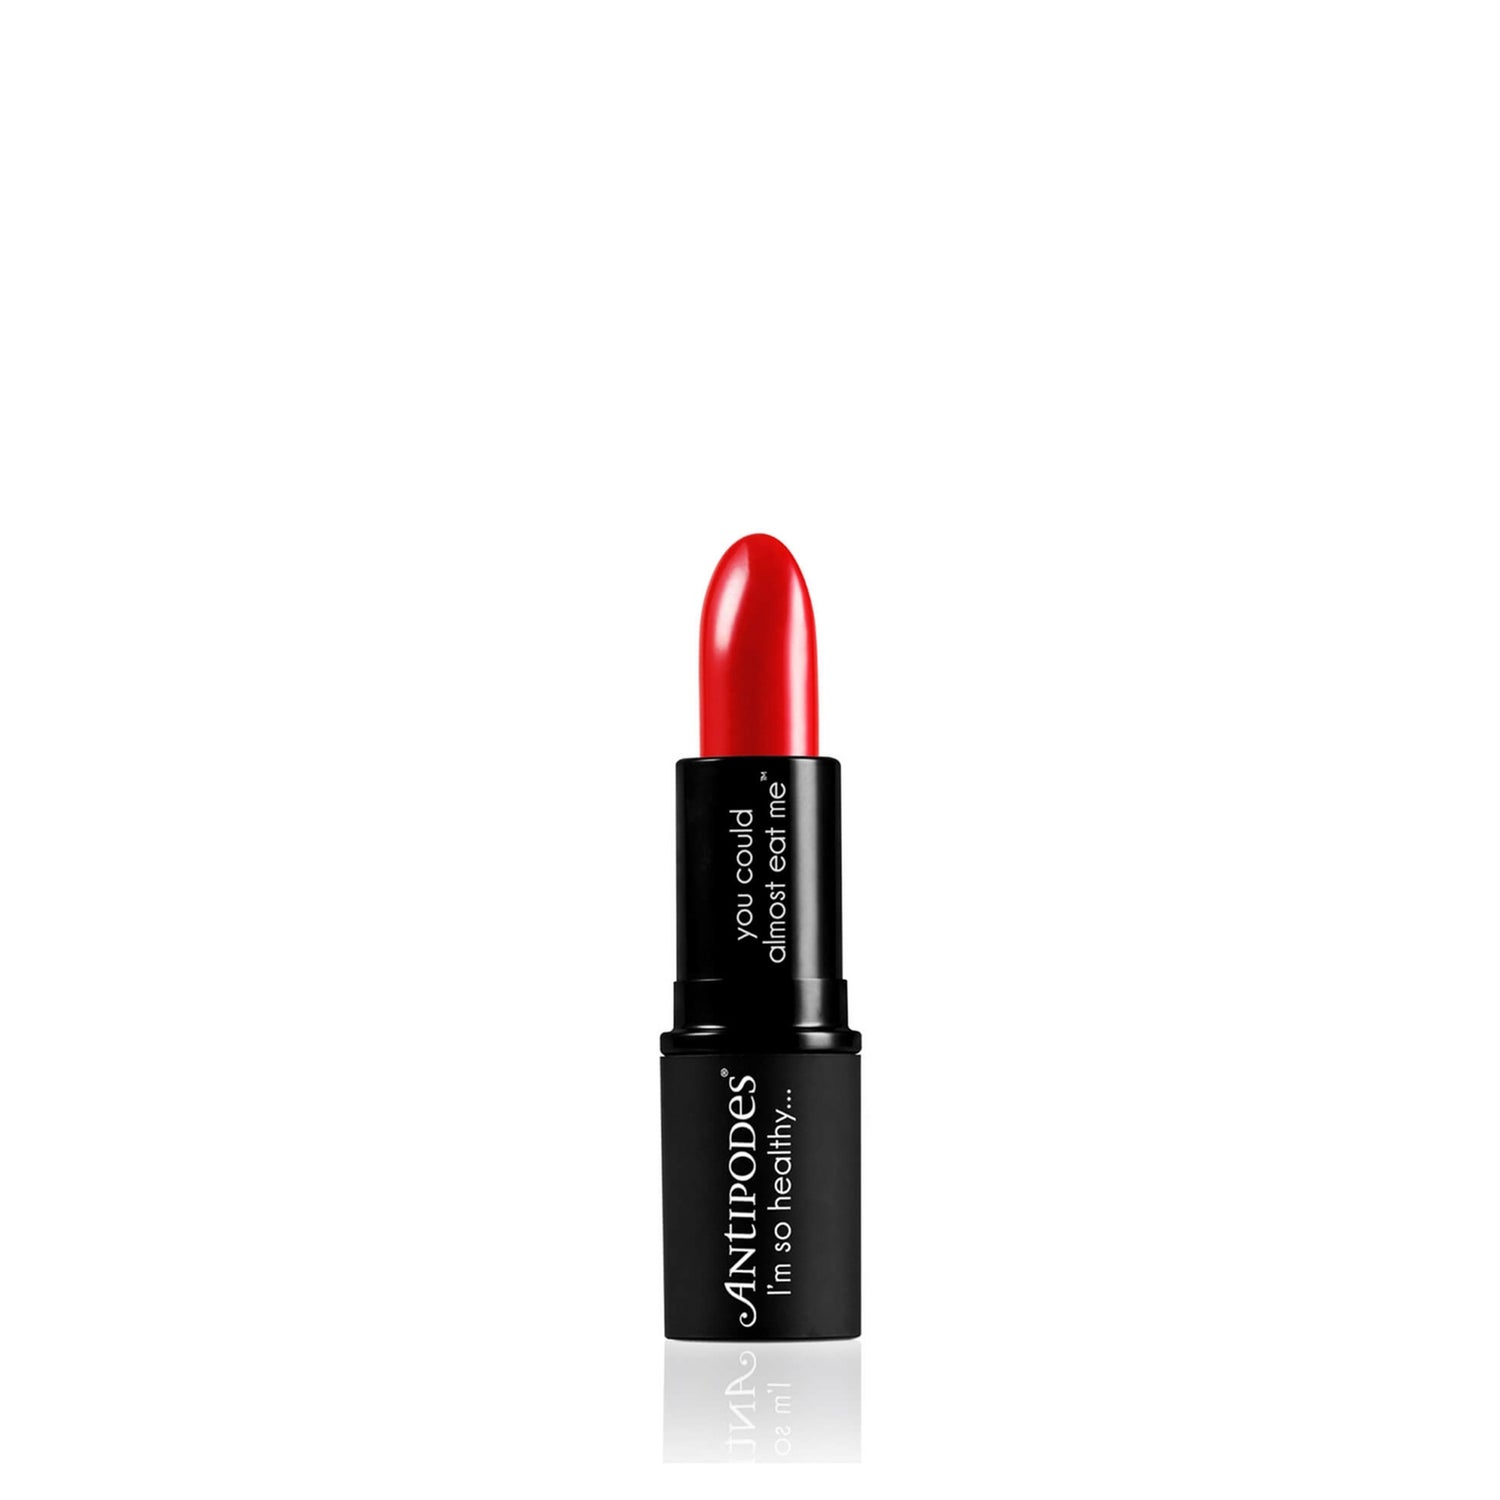 Forest Berry Red Lipstick 0.141 fl.oz